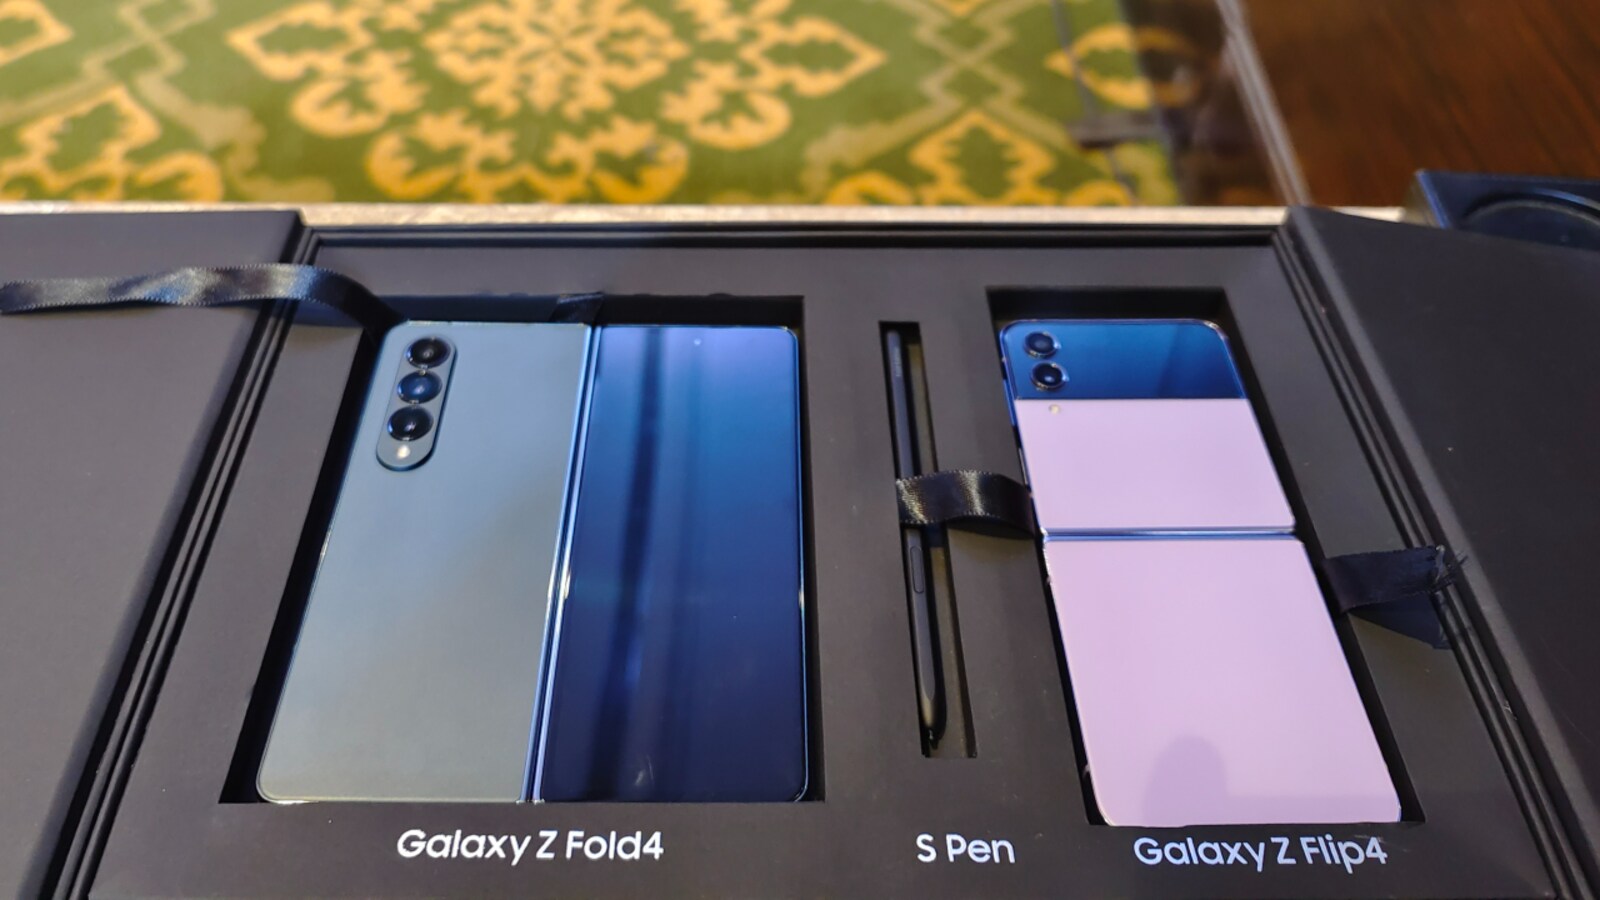 Samsung Galaxy Z Flip 4, Galaxy Z Fold 4 sees surge in demand in